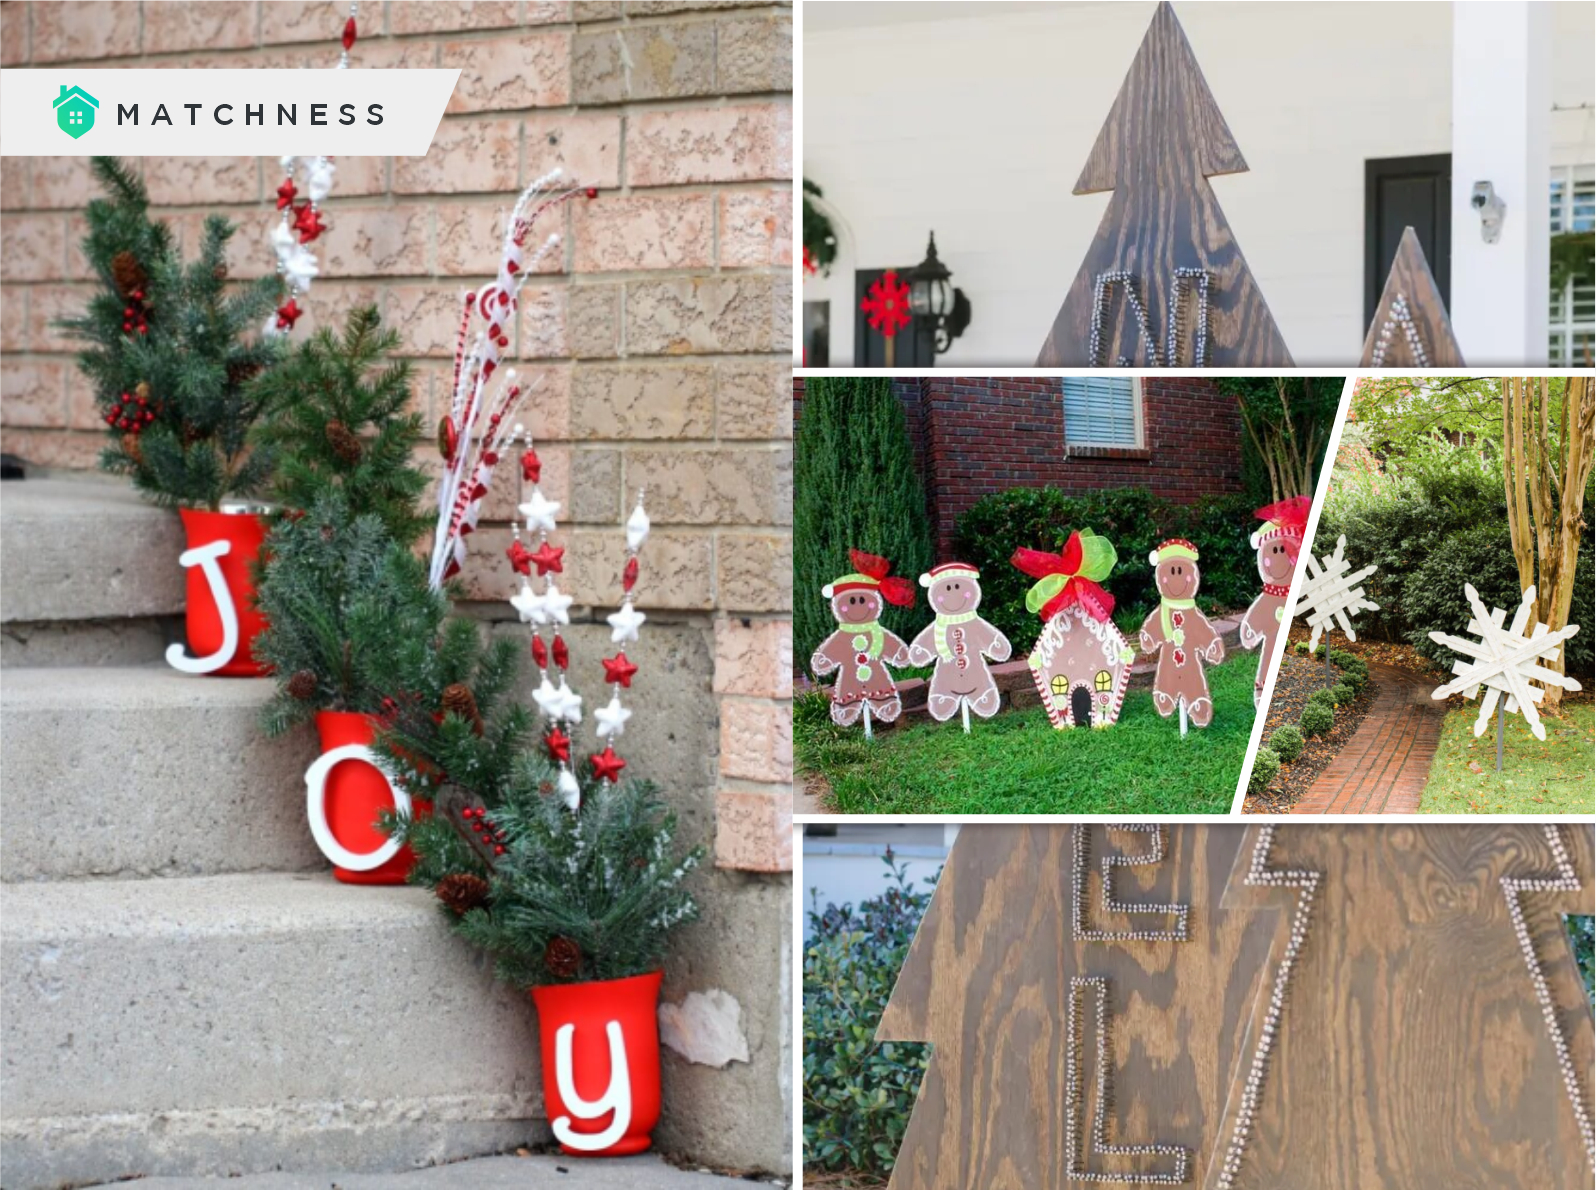 40 Interesting Christmas Yard Art Ideas - Matchness.com